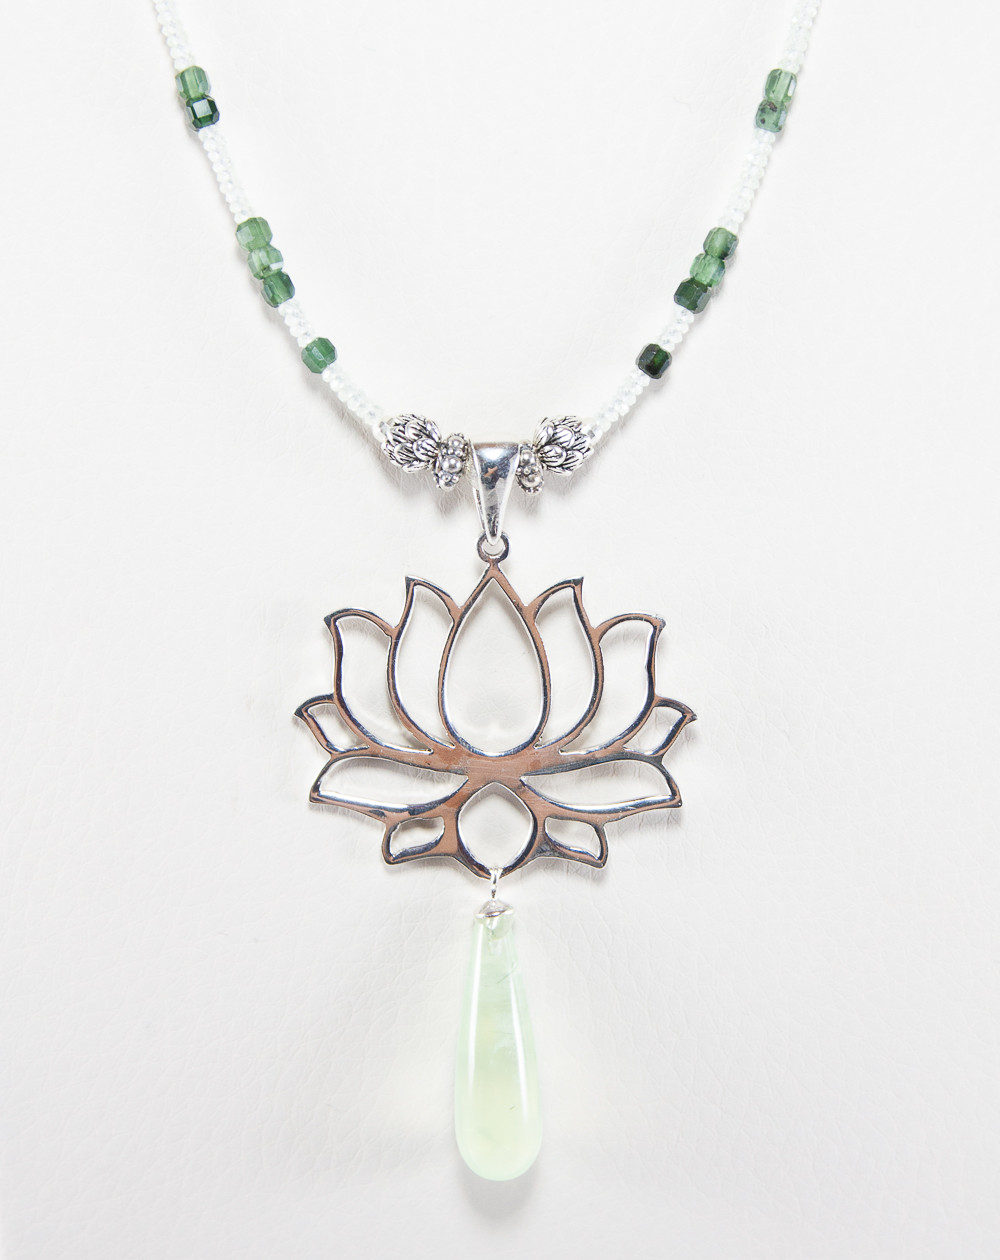 Sautoir Fleur de Lotus Préhnite Jade Collection Dokbua. Sanuk Création, Bayonne